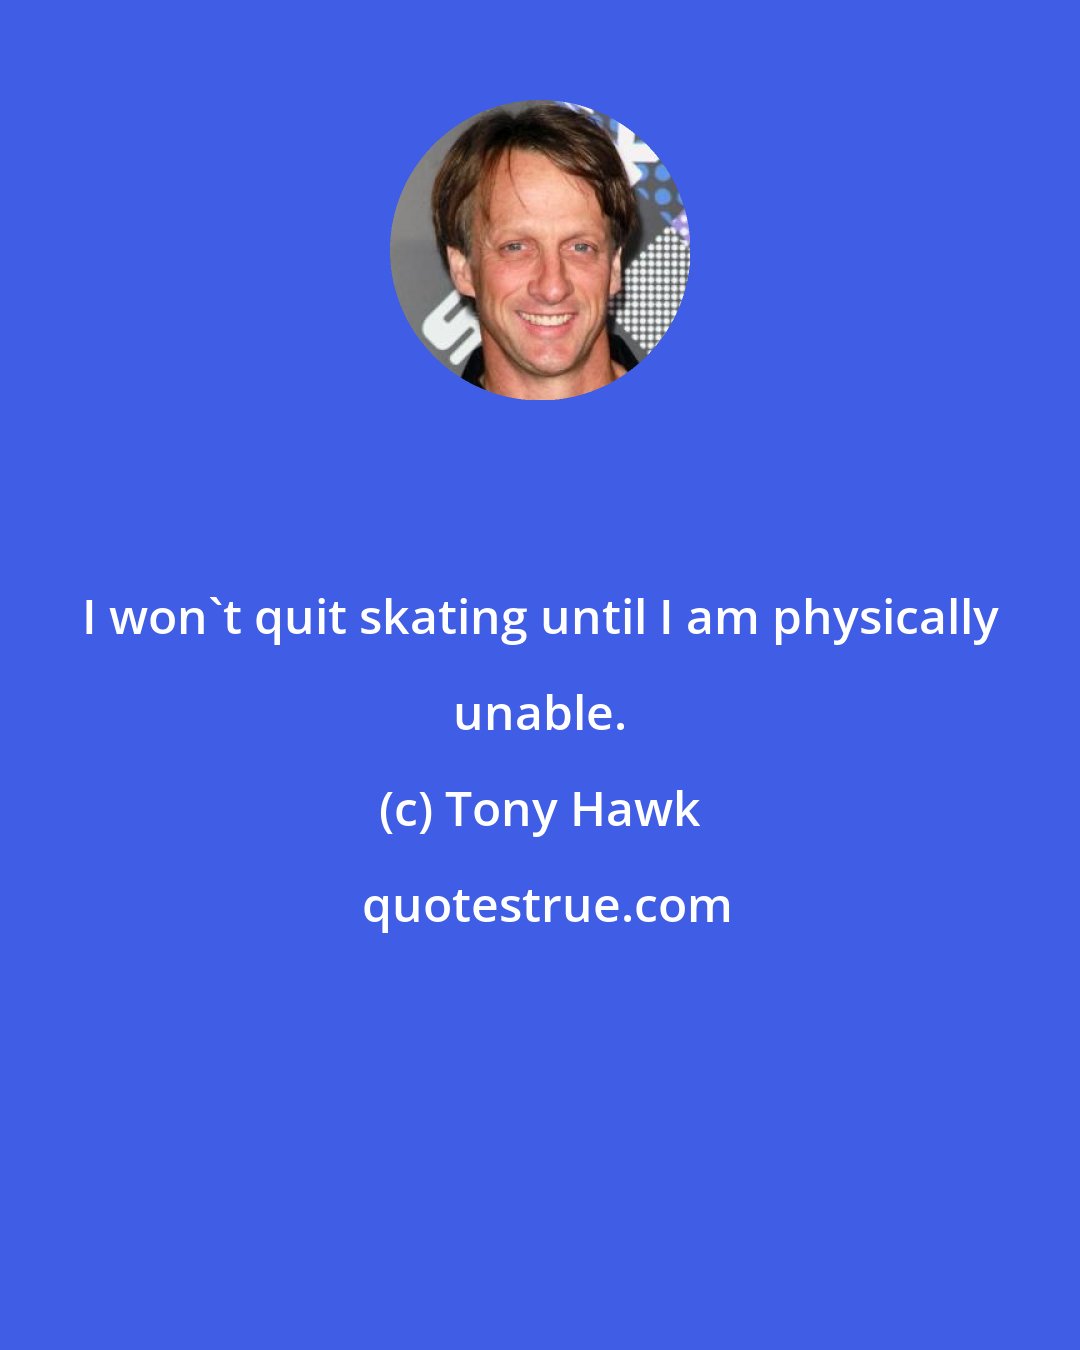 Tony Hawk: I won't quit skating until I am physically unable.